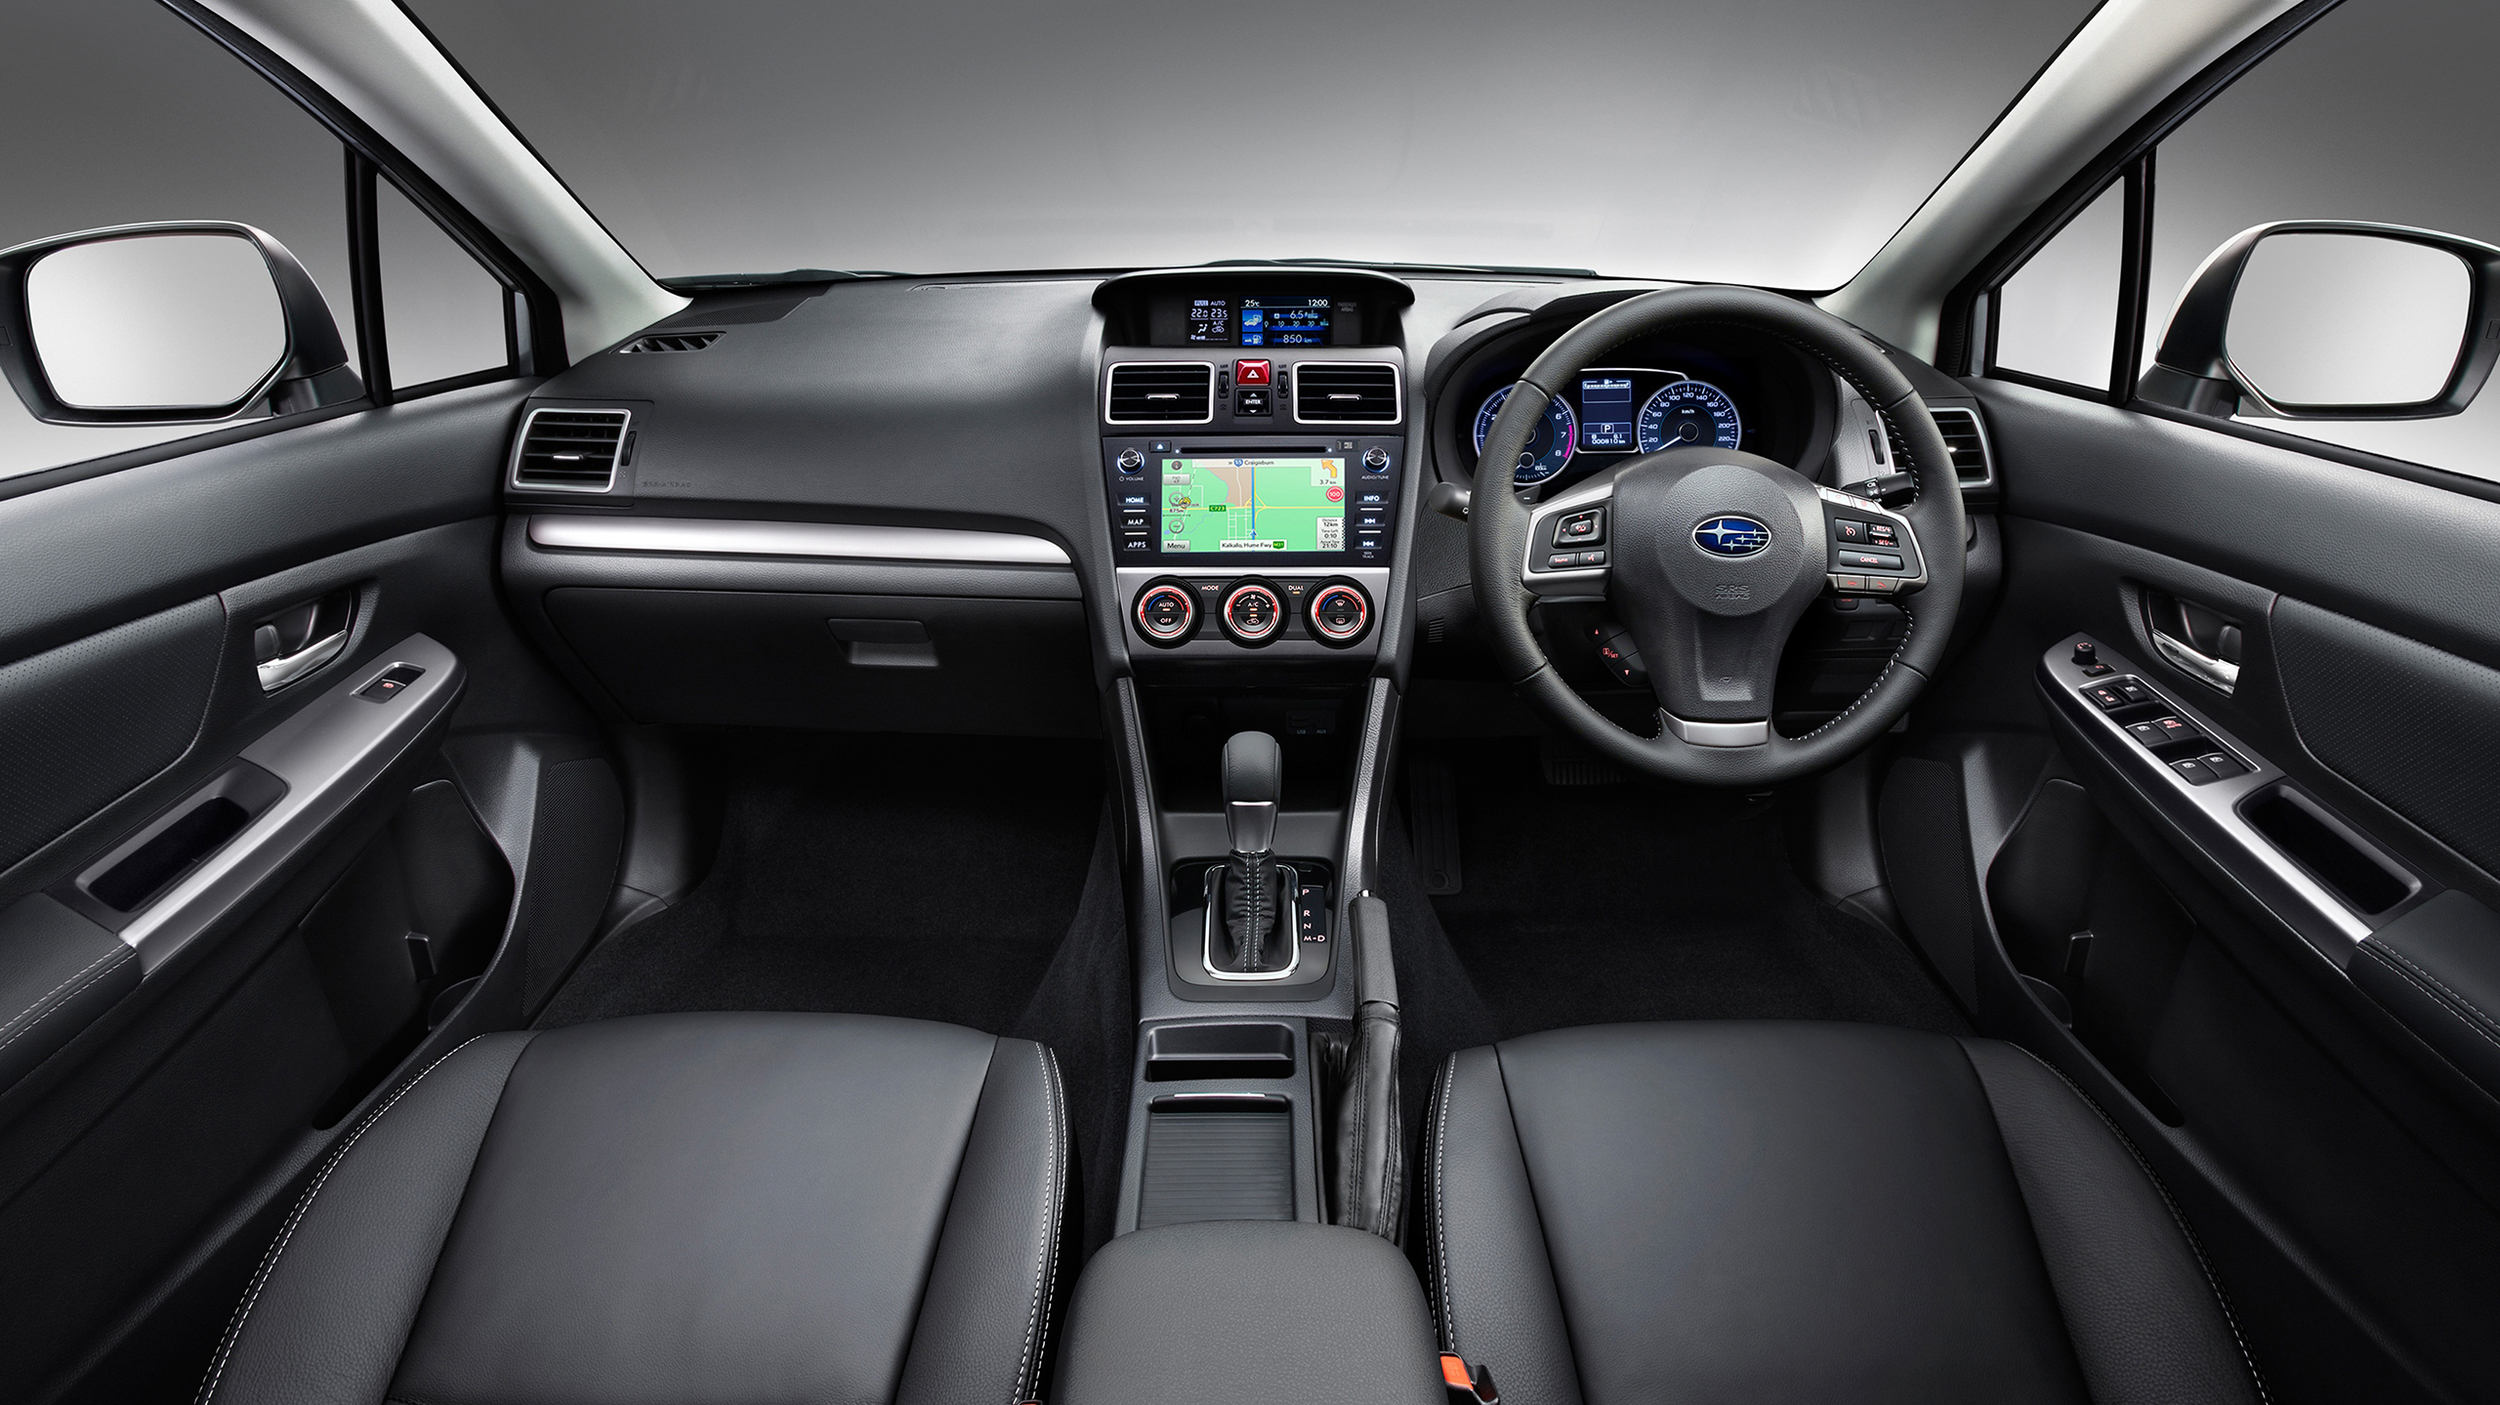 Subaru XV gets new upgrades and tech